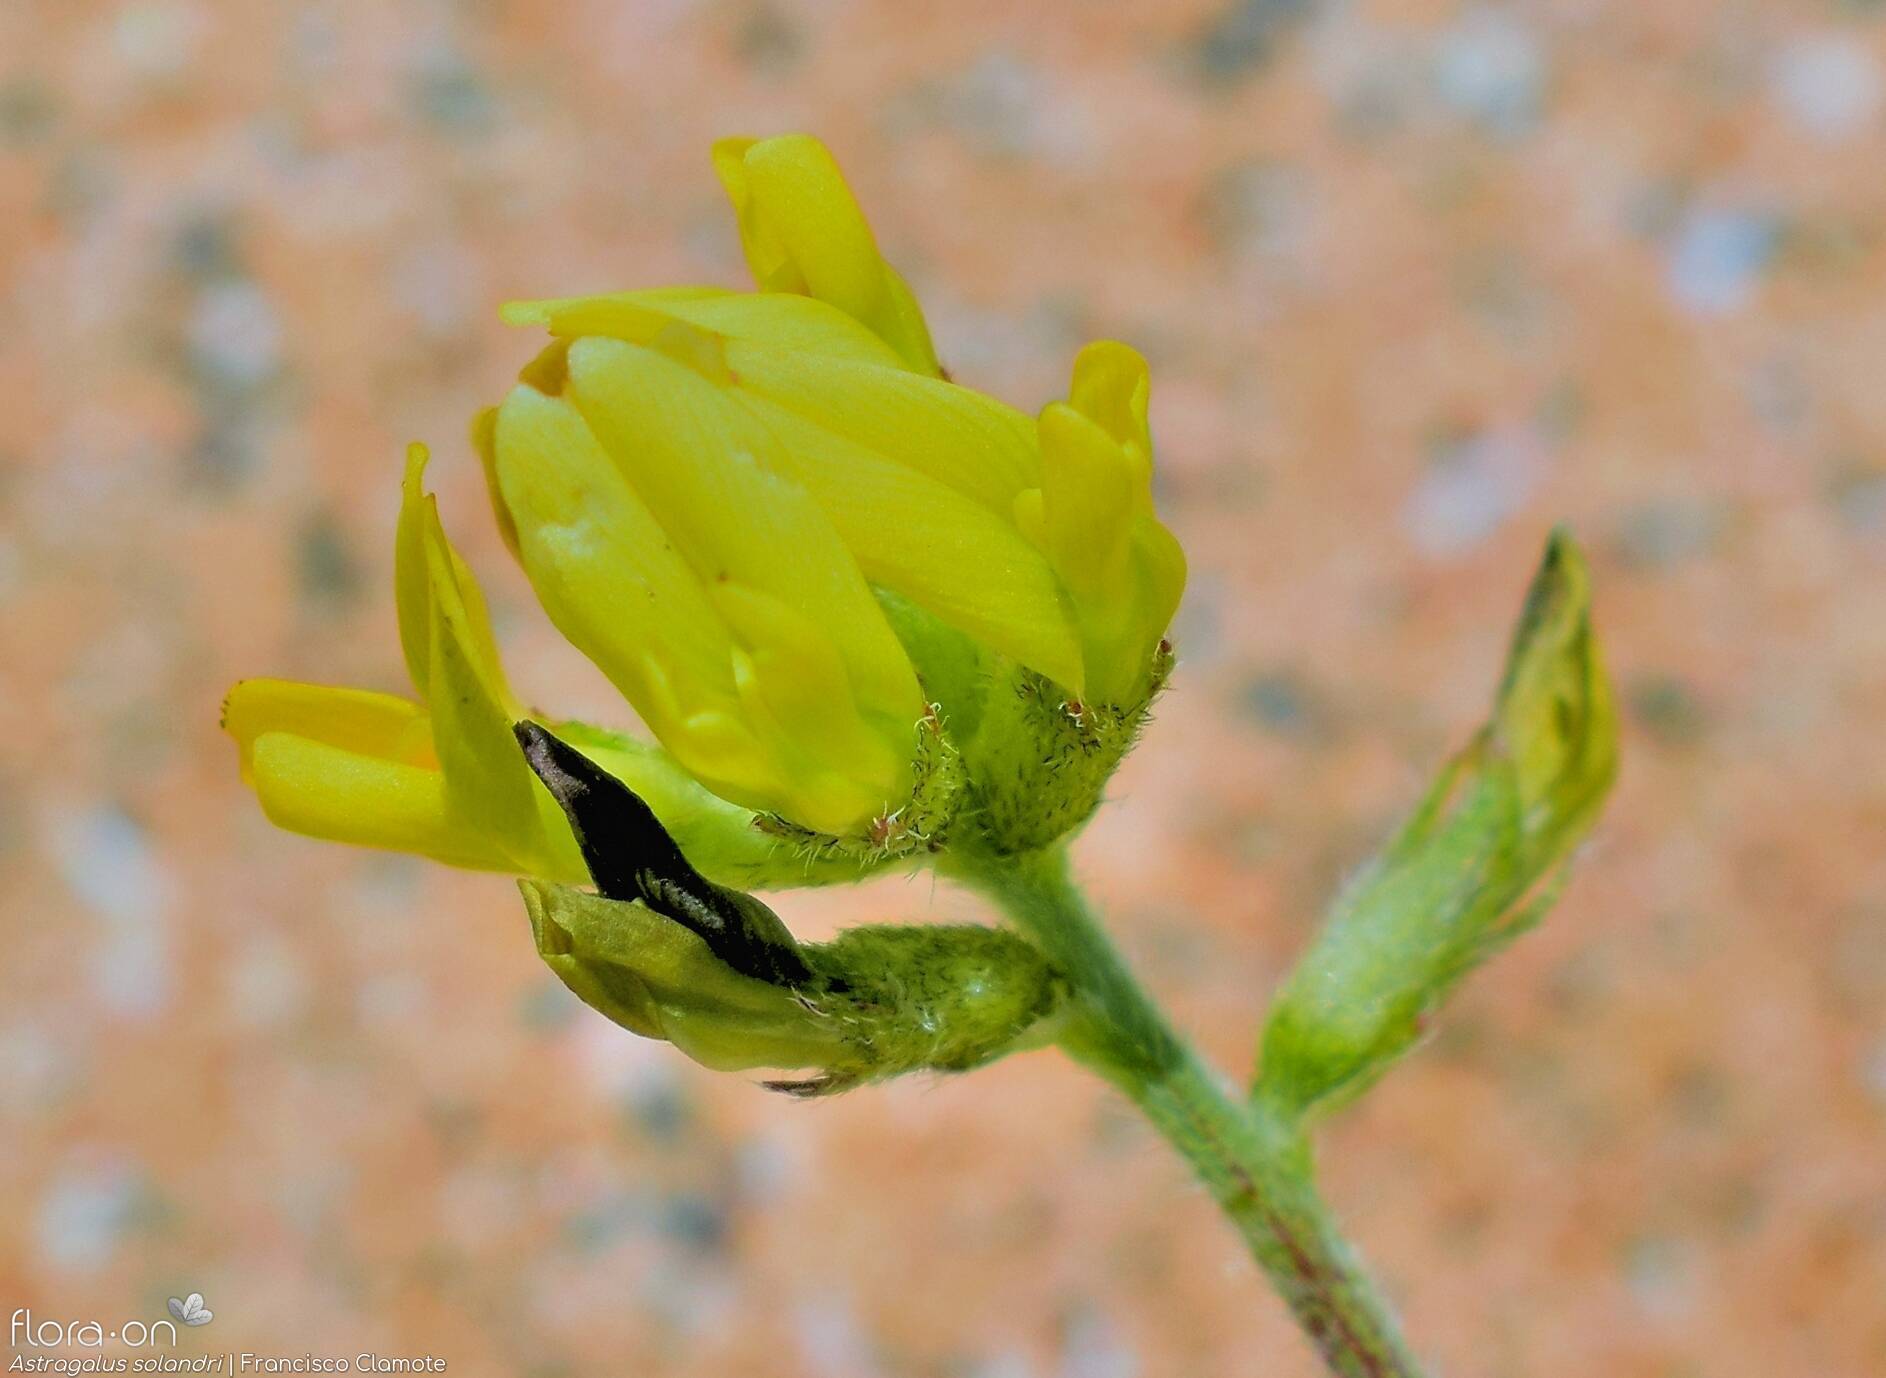 Astragalus solandri - Flor (close-up) | Francisco Clamote; CC BY-NC 4.0